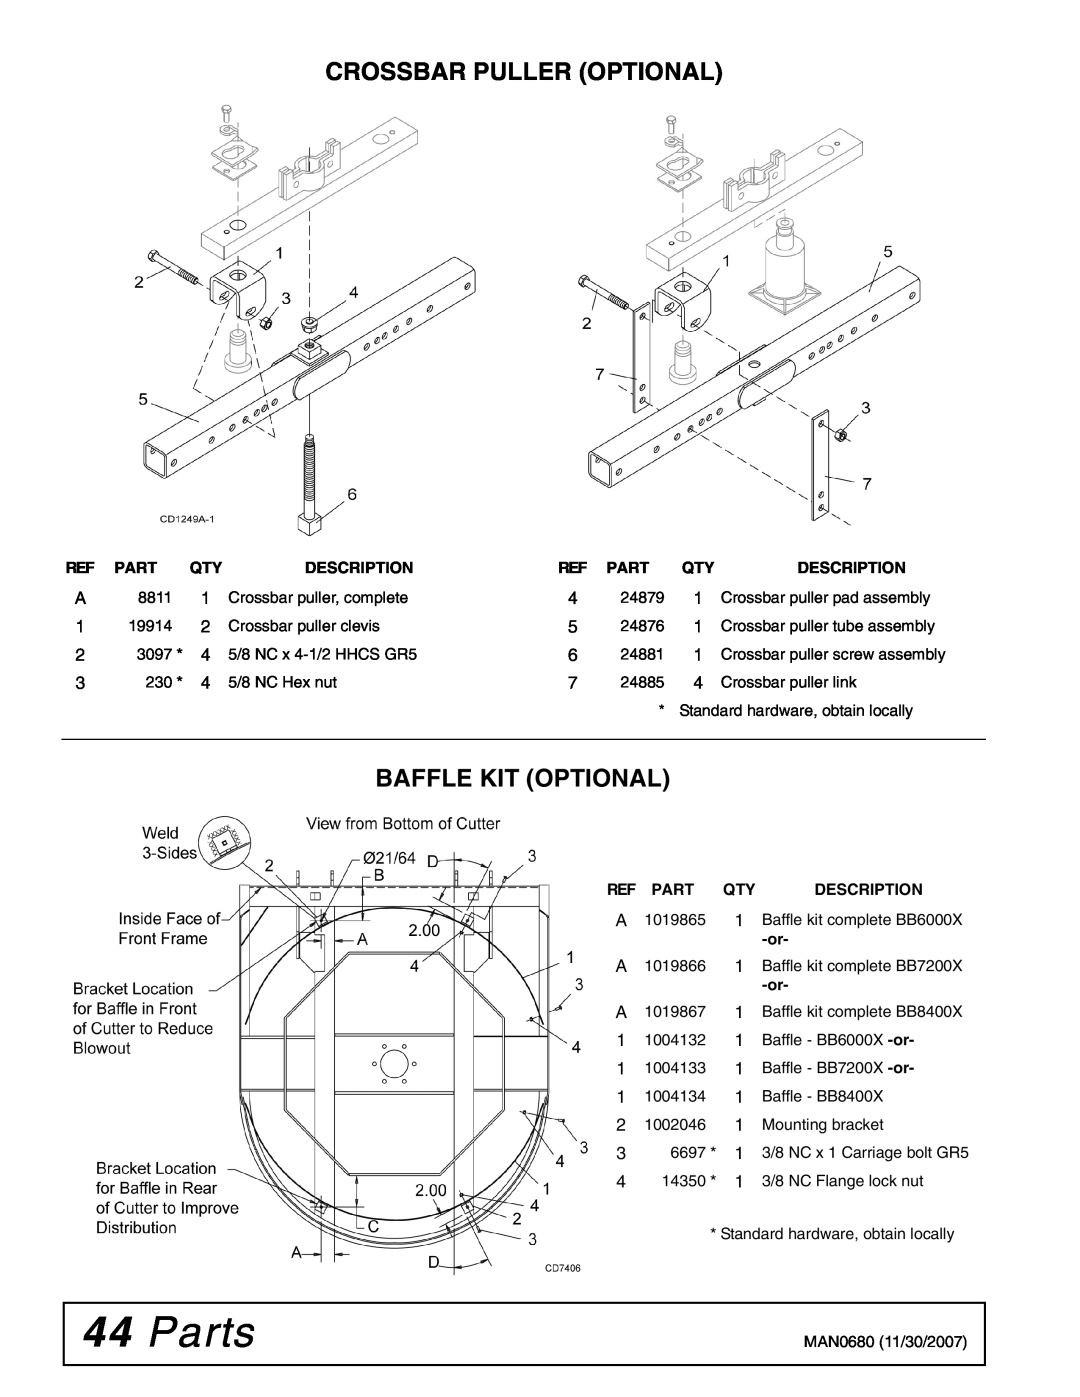 Woods Equipment MAN0680, BB7200X, BB8400X, BB6000X manual Parts, Crossbar Puller Optional, Baffle Kit Optional 